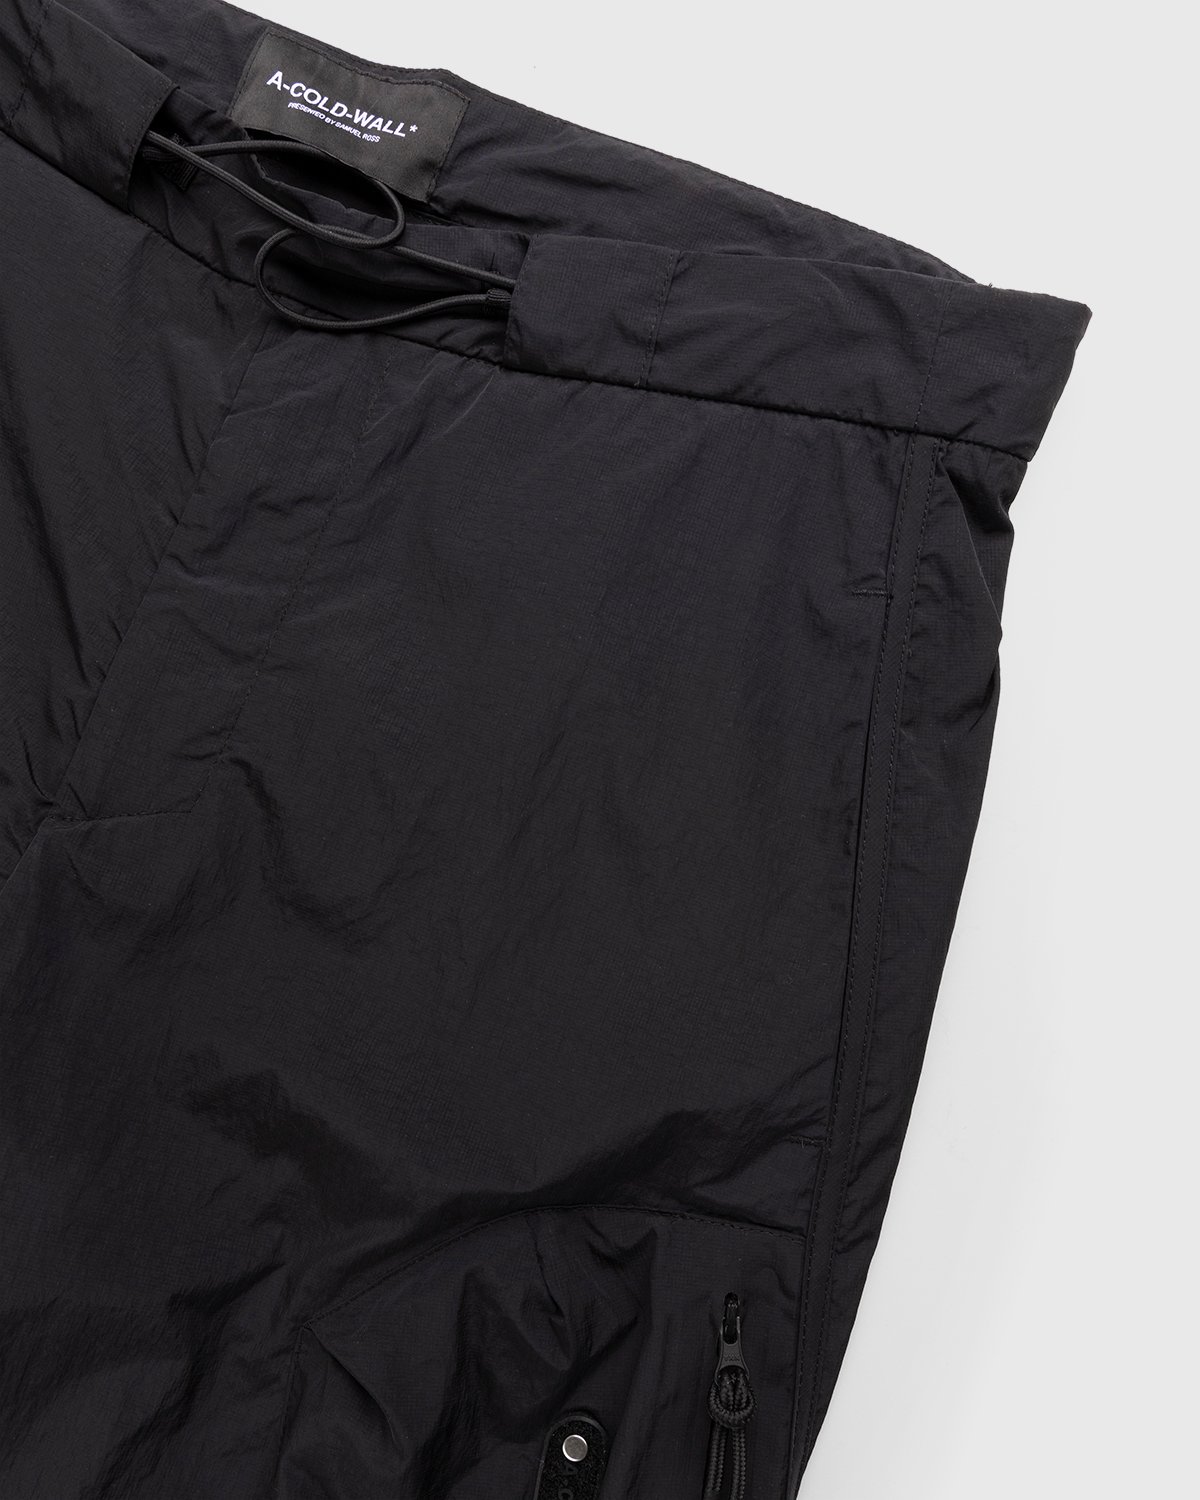 A-Cold-Wall* - Portage Pant Black - Clothing - Black - Image 4